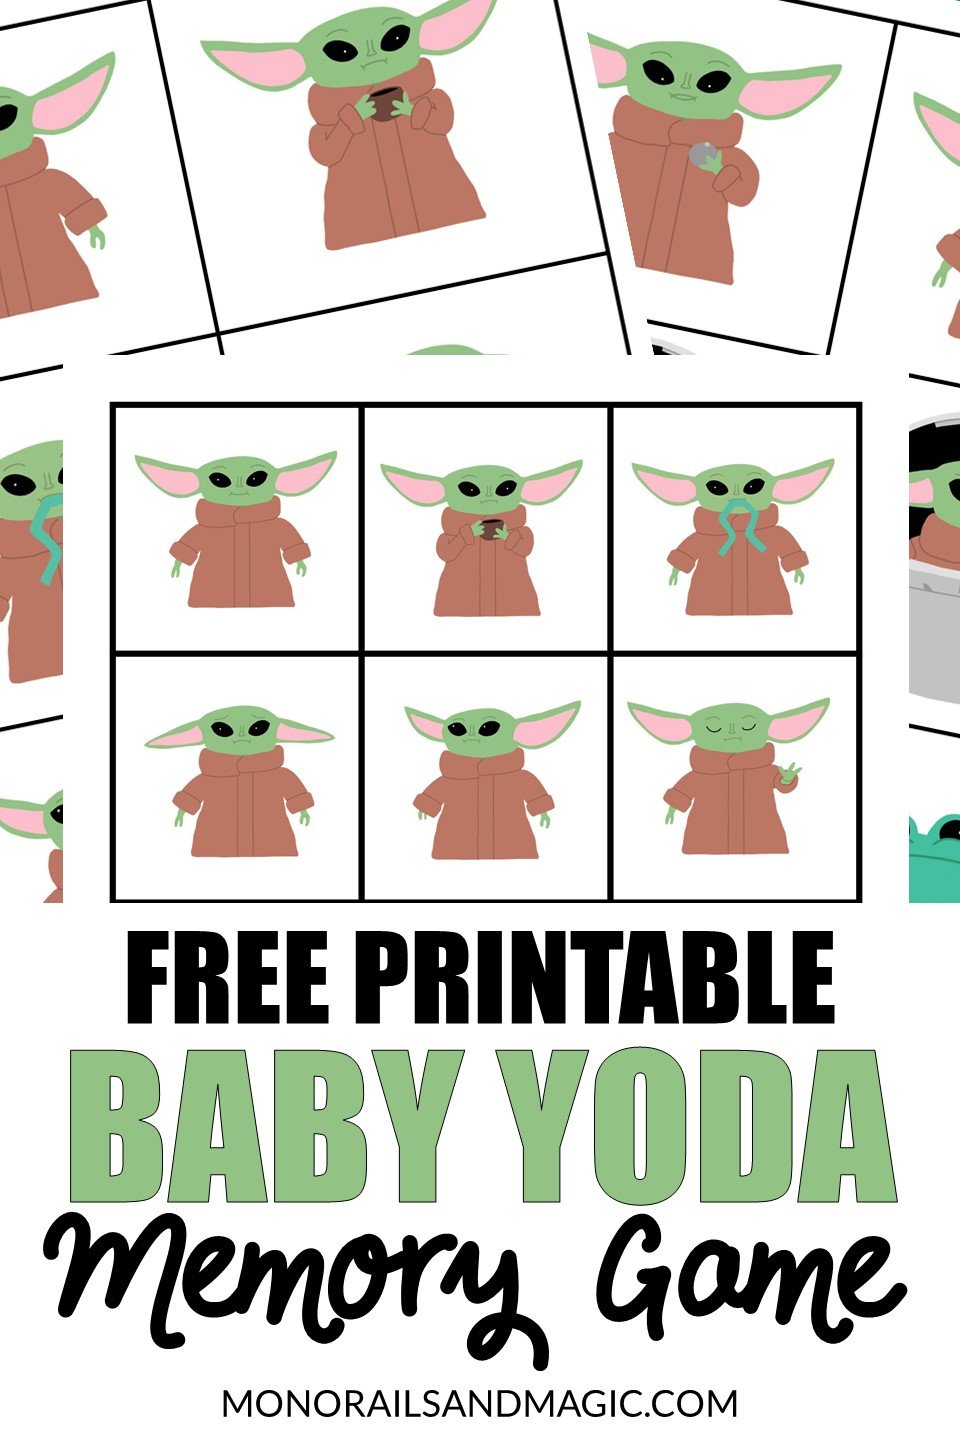 Free printable Baby Yoda memory game for kids.